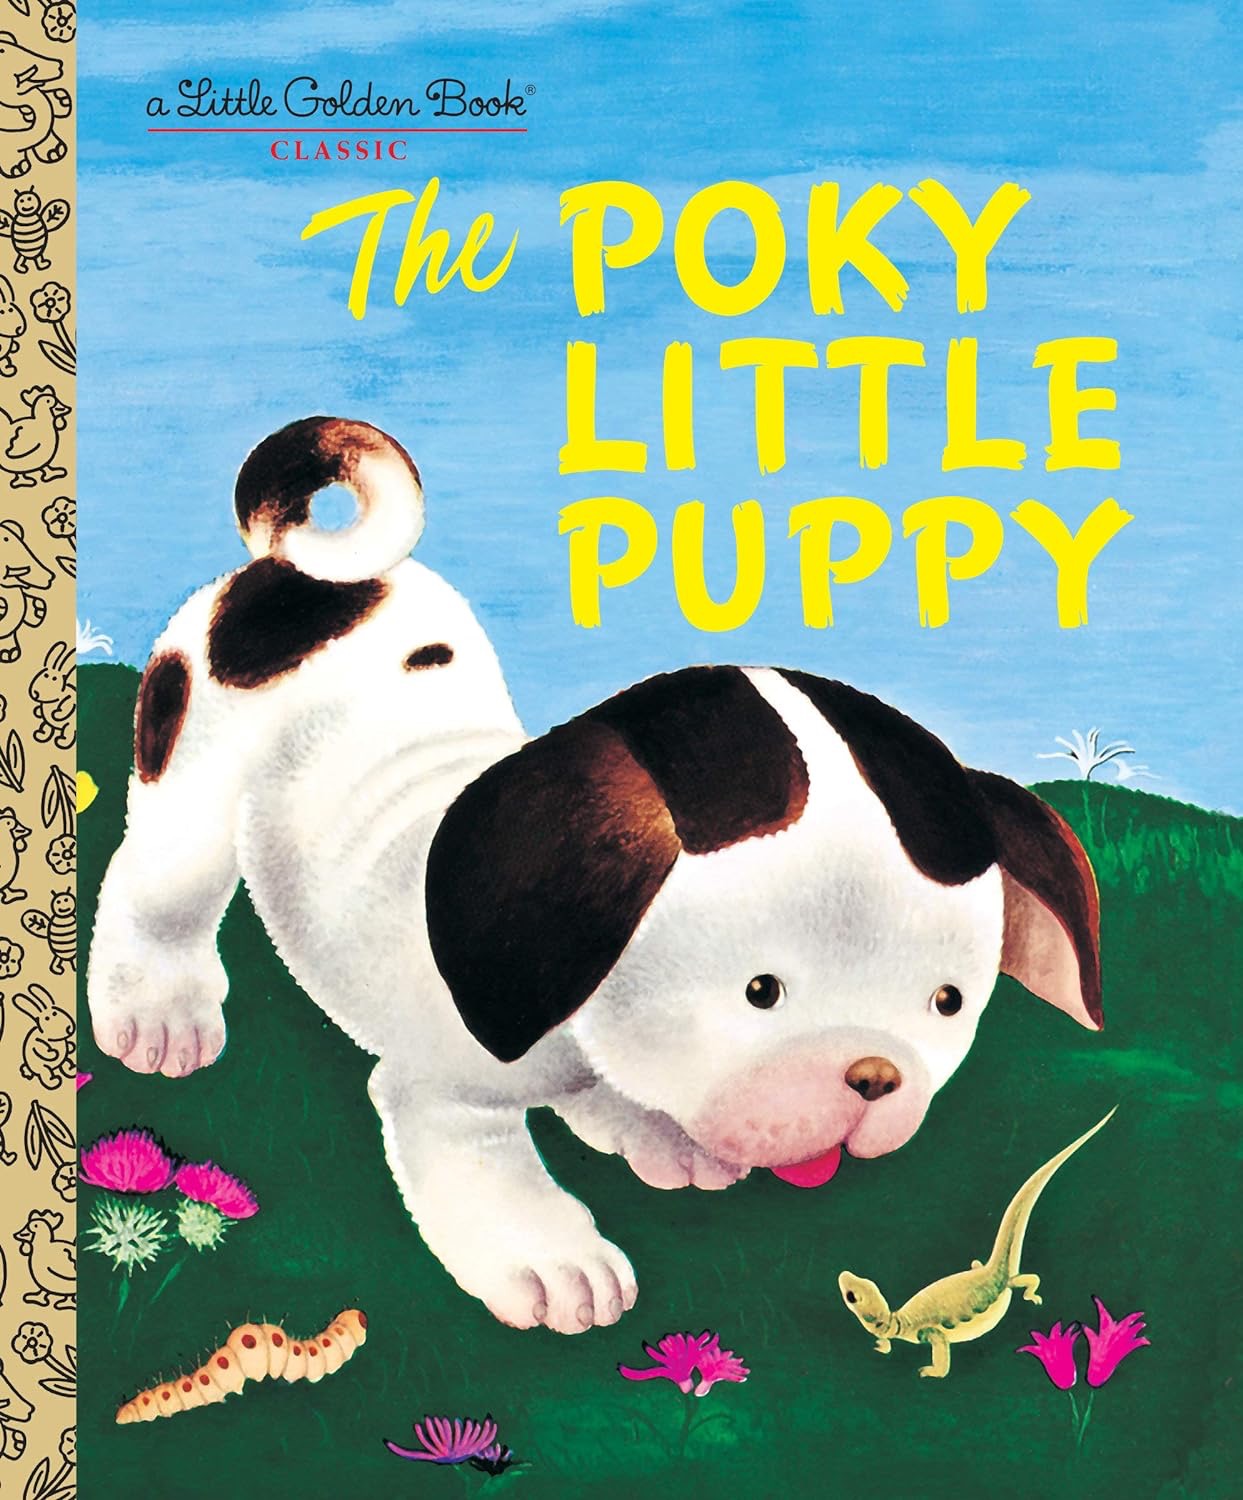 "The Poky Little Puppy" Little Golden Book